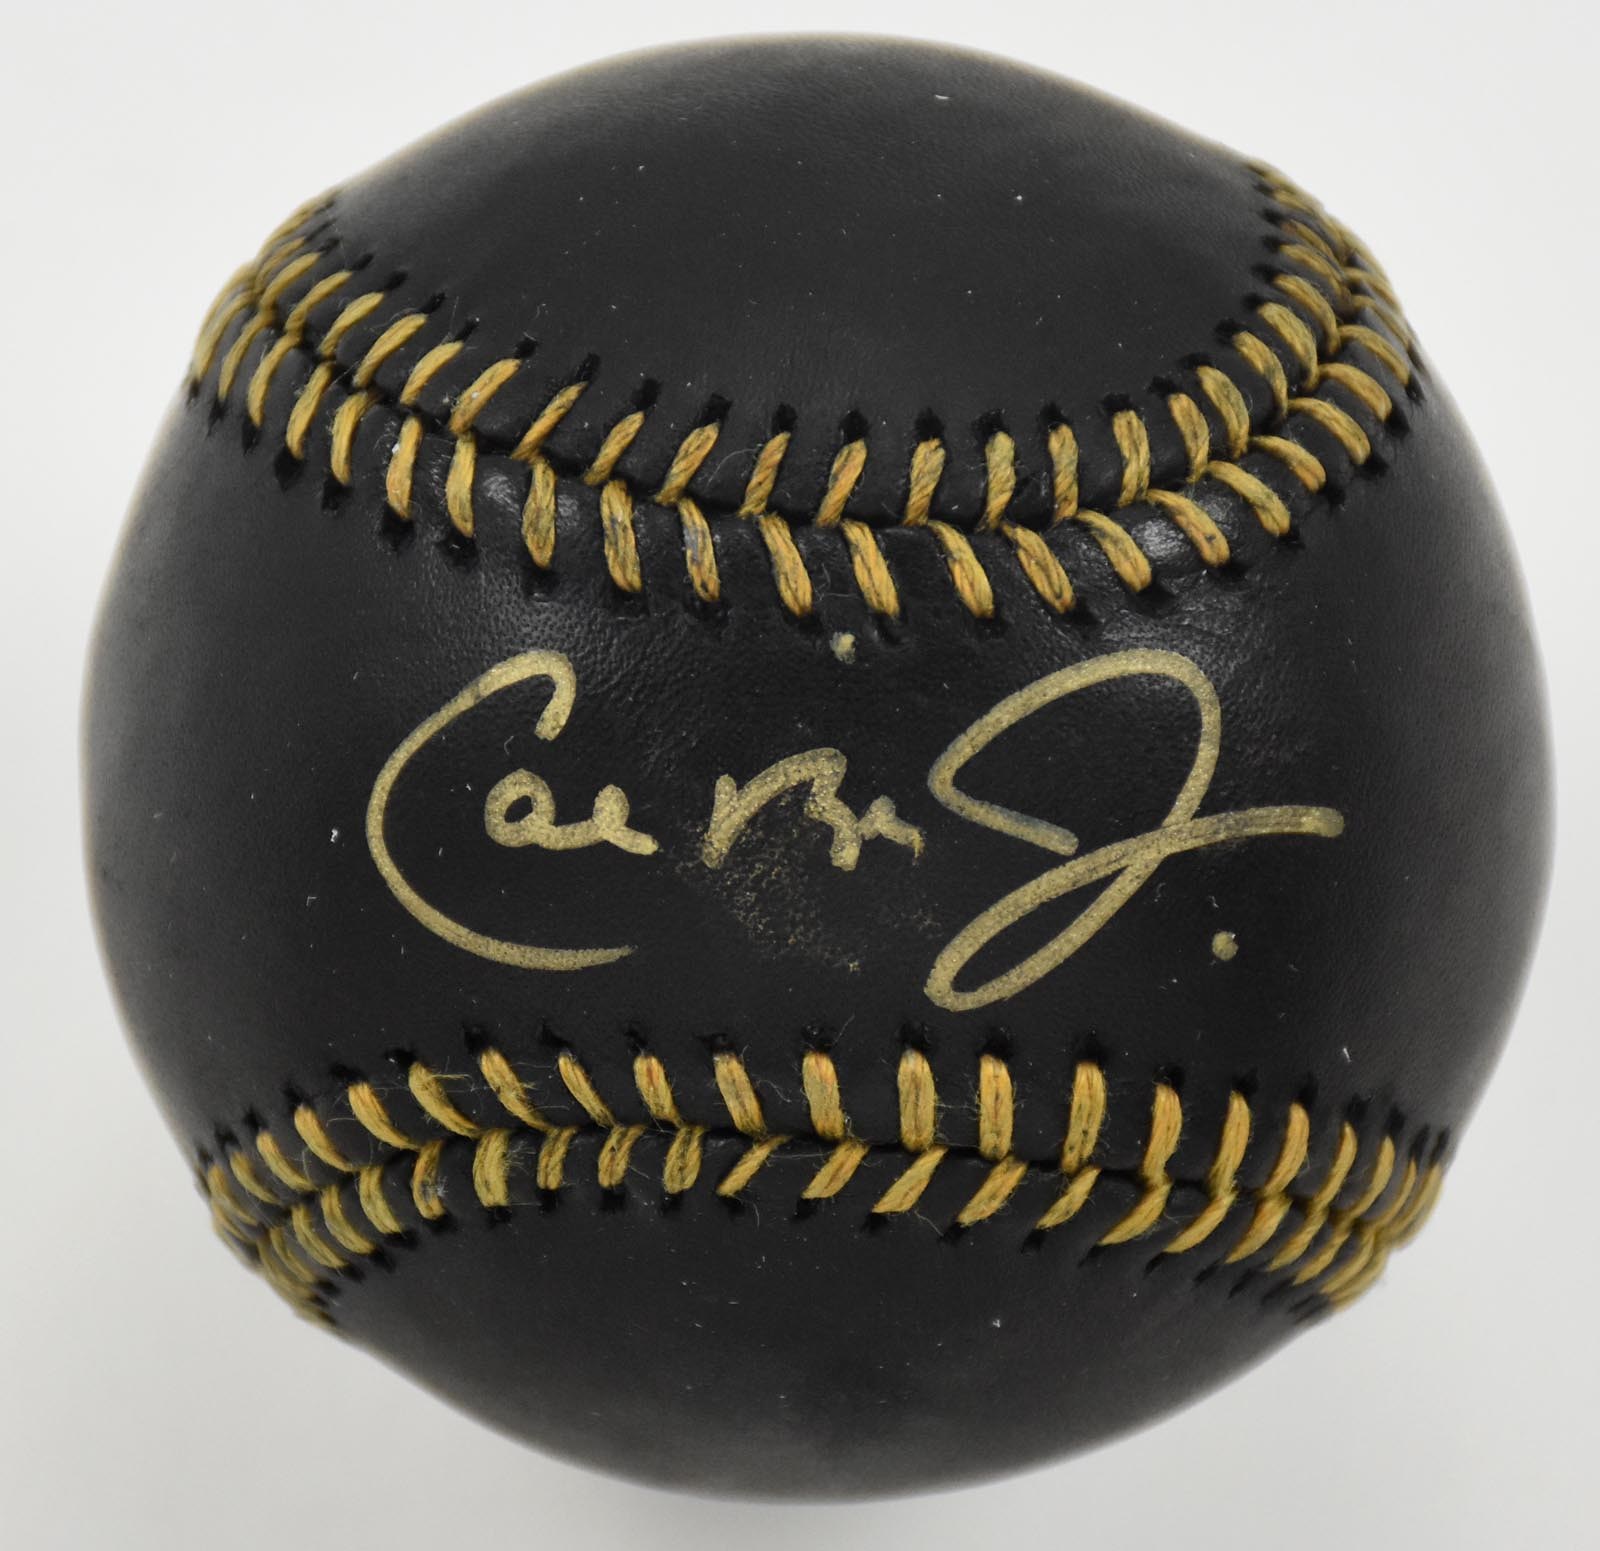 - Perfect Cal Ripken Jr. Single Signed Black Leather Baseball (PSA Graded GEM MINT 10)